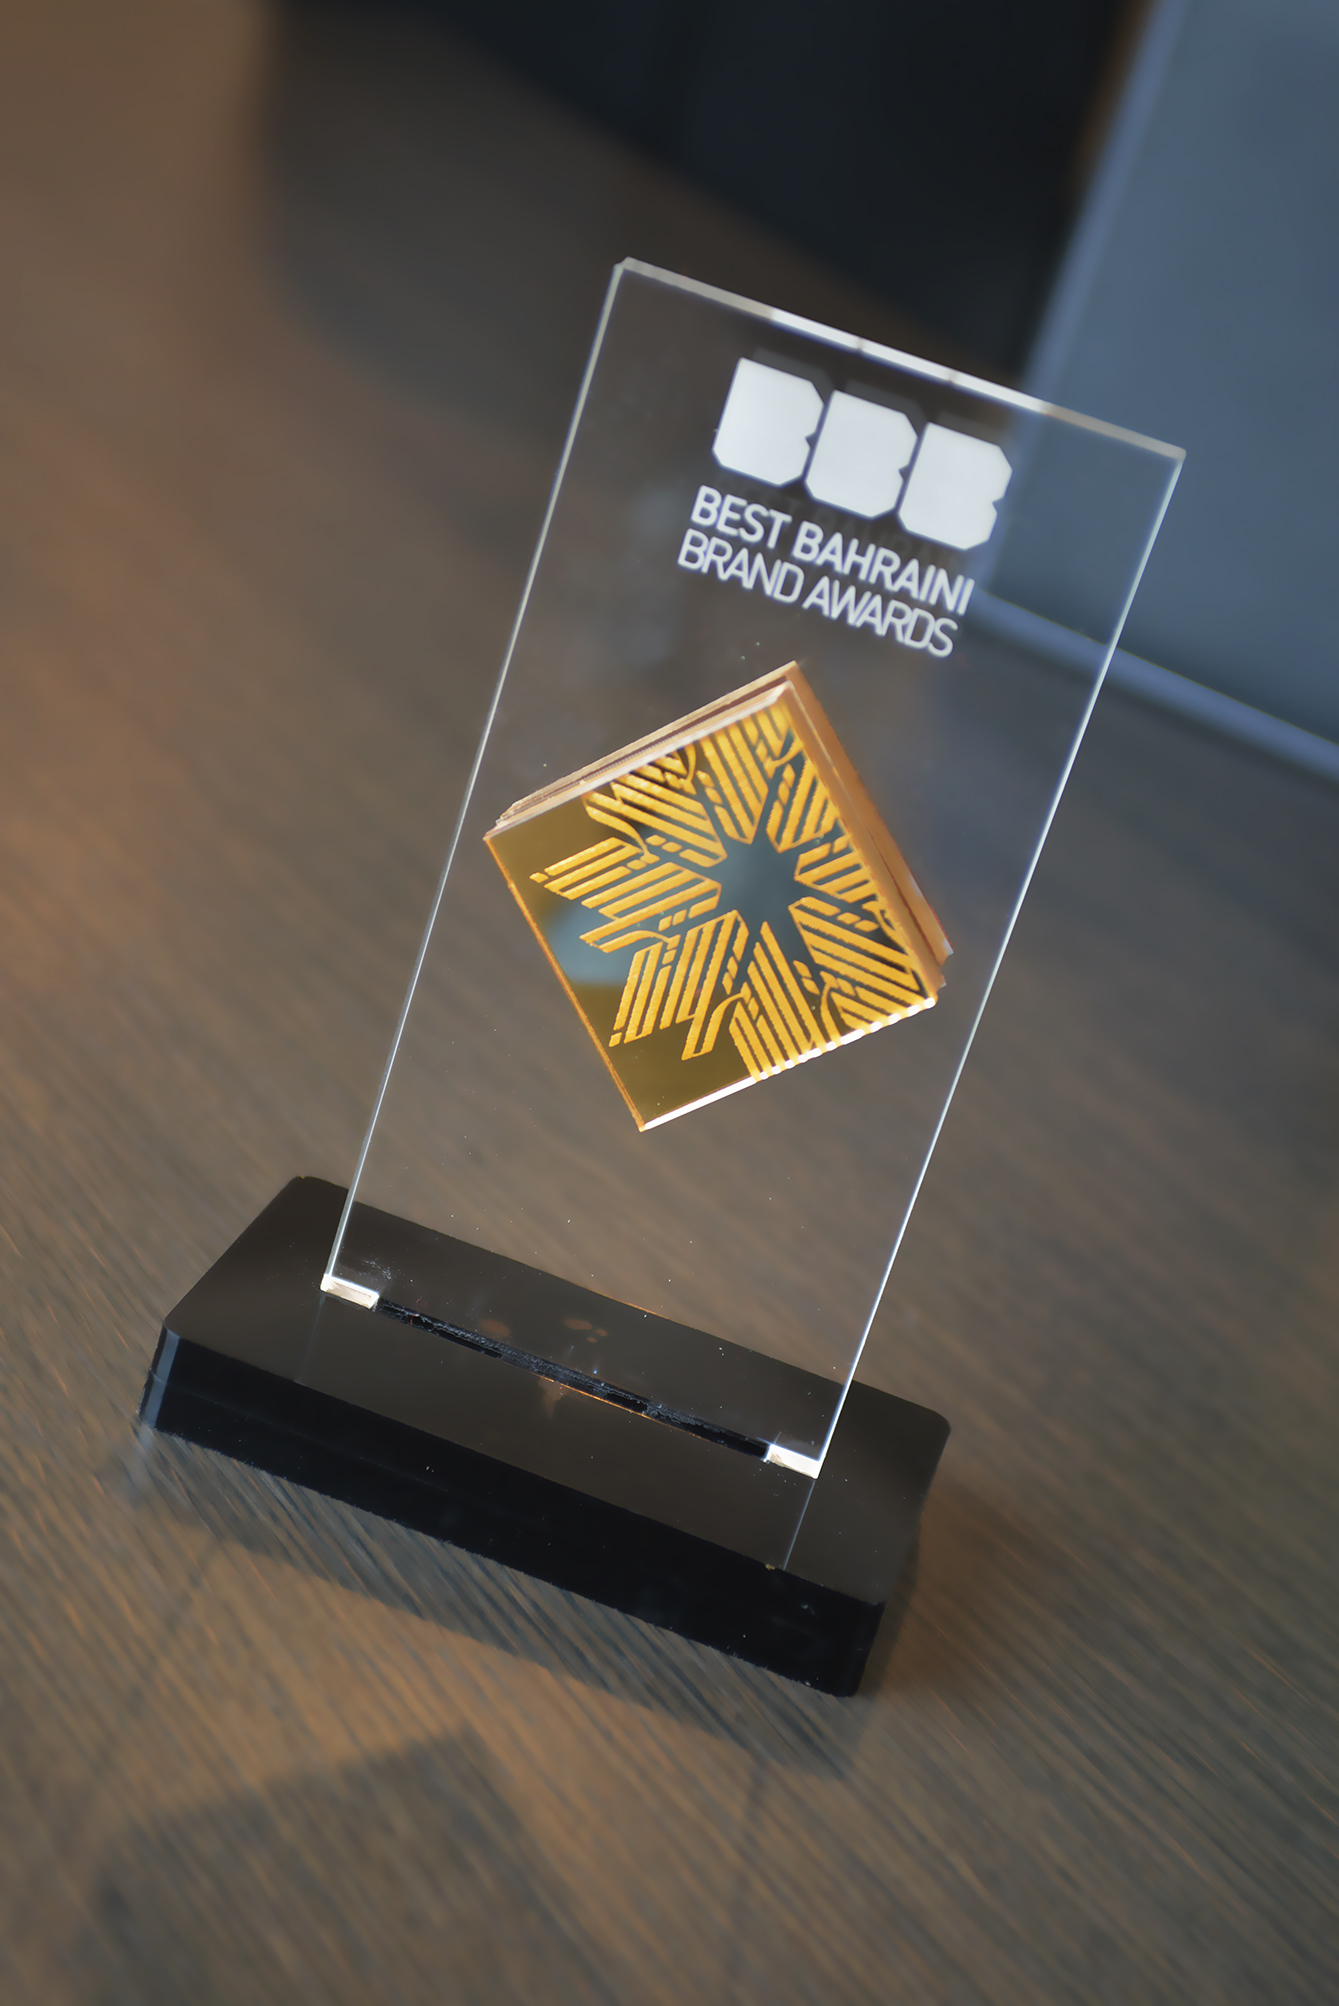 Miracle Receives the Best Bahraini Brand Award for the ArtBahrain logo & Identity.